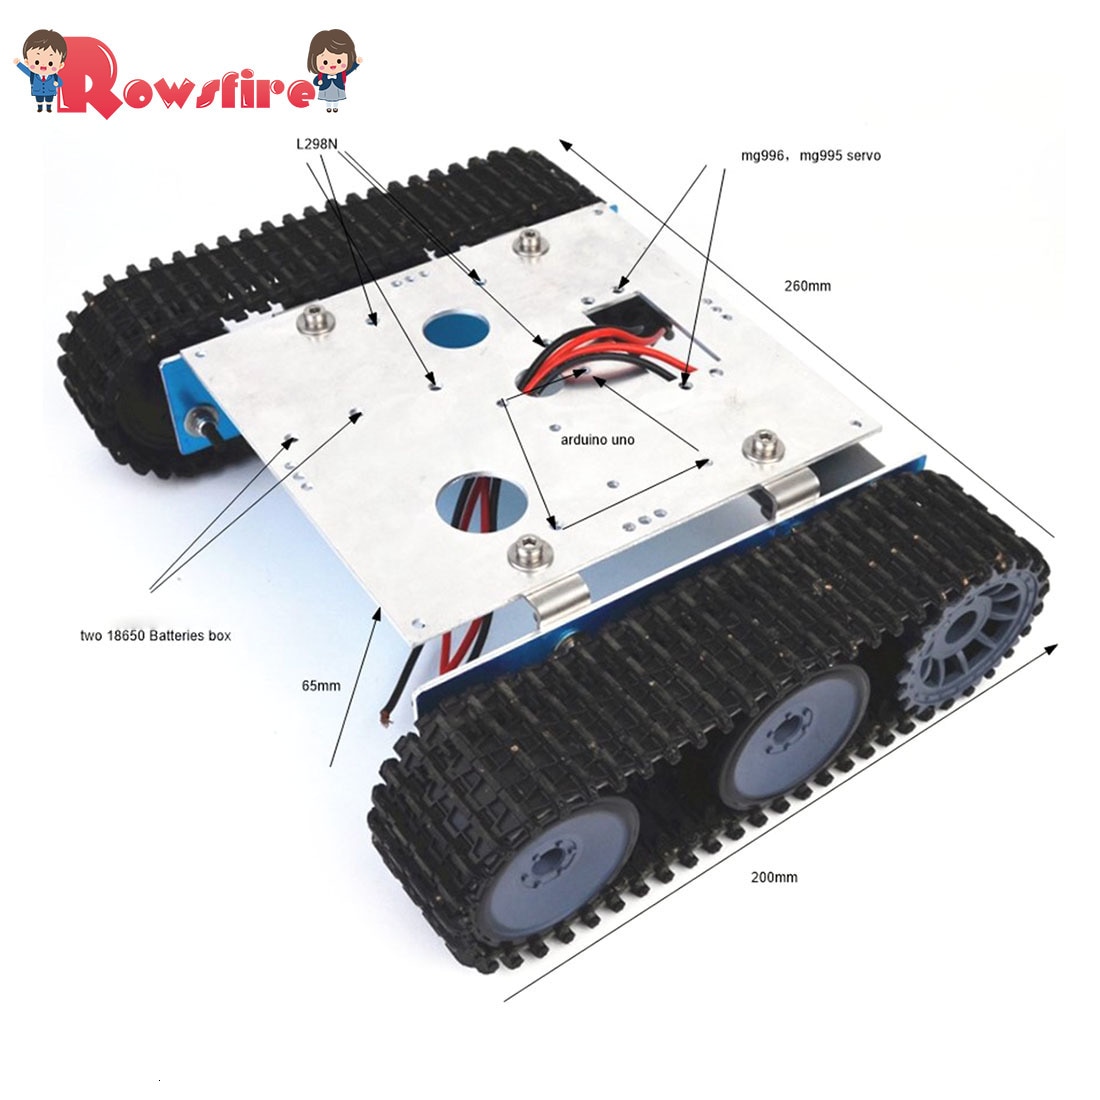 Diy Aluminium Tank Robot Rups Voertuig Platform Chassis Assembly Kit Voor Arduino